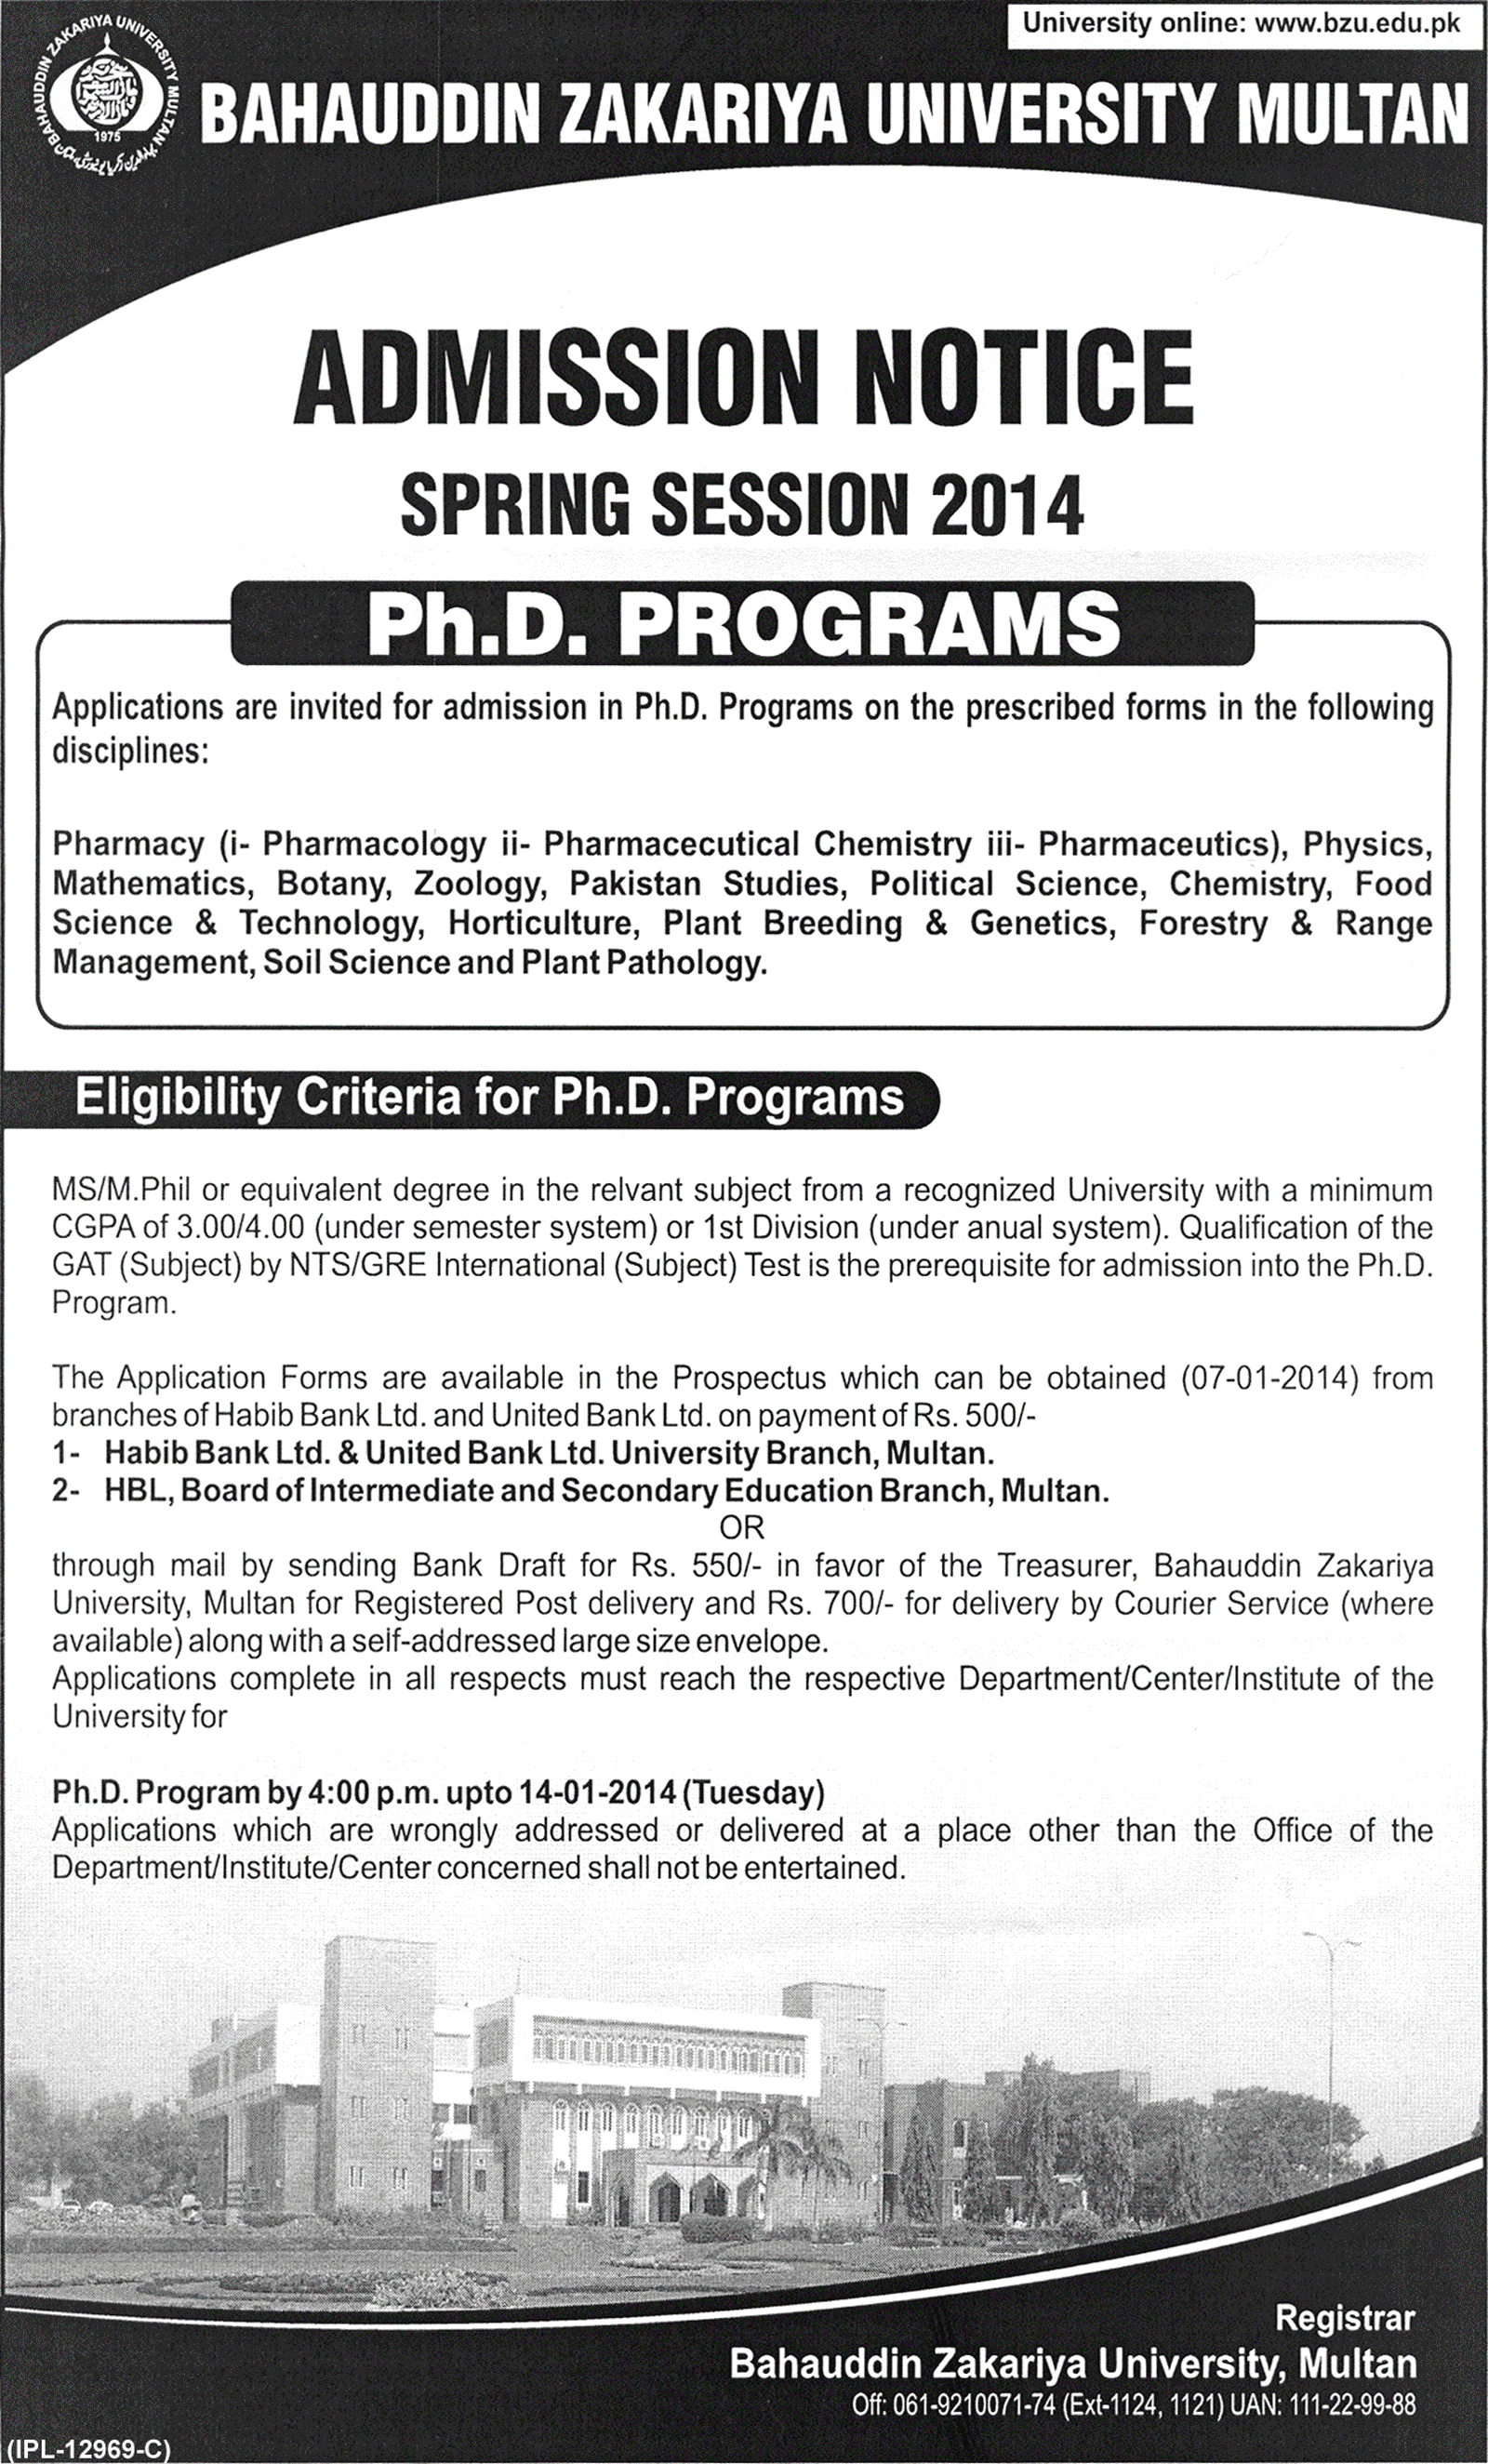 Bahauddin Zakariya University (BZU) Multan Admission Notice 2013 for Ph.D. Pharmacy (Pharmaceutical Chemistry, Pharmacology, Pharmaceutics), Food Science & Technology